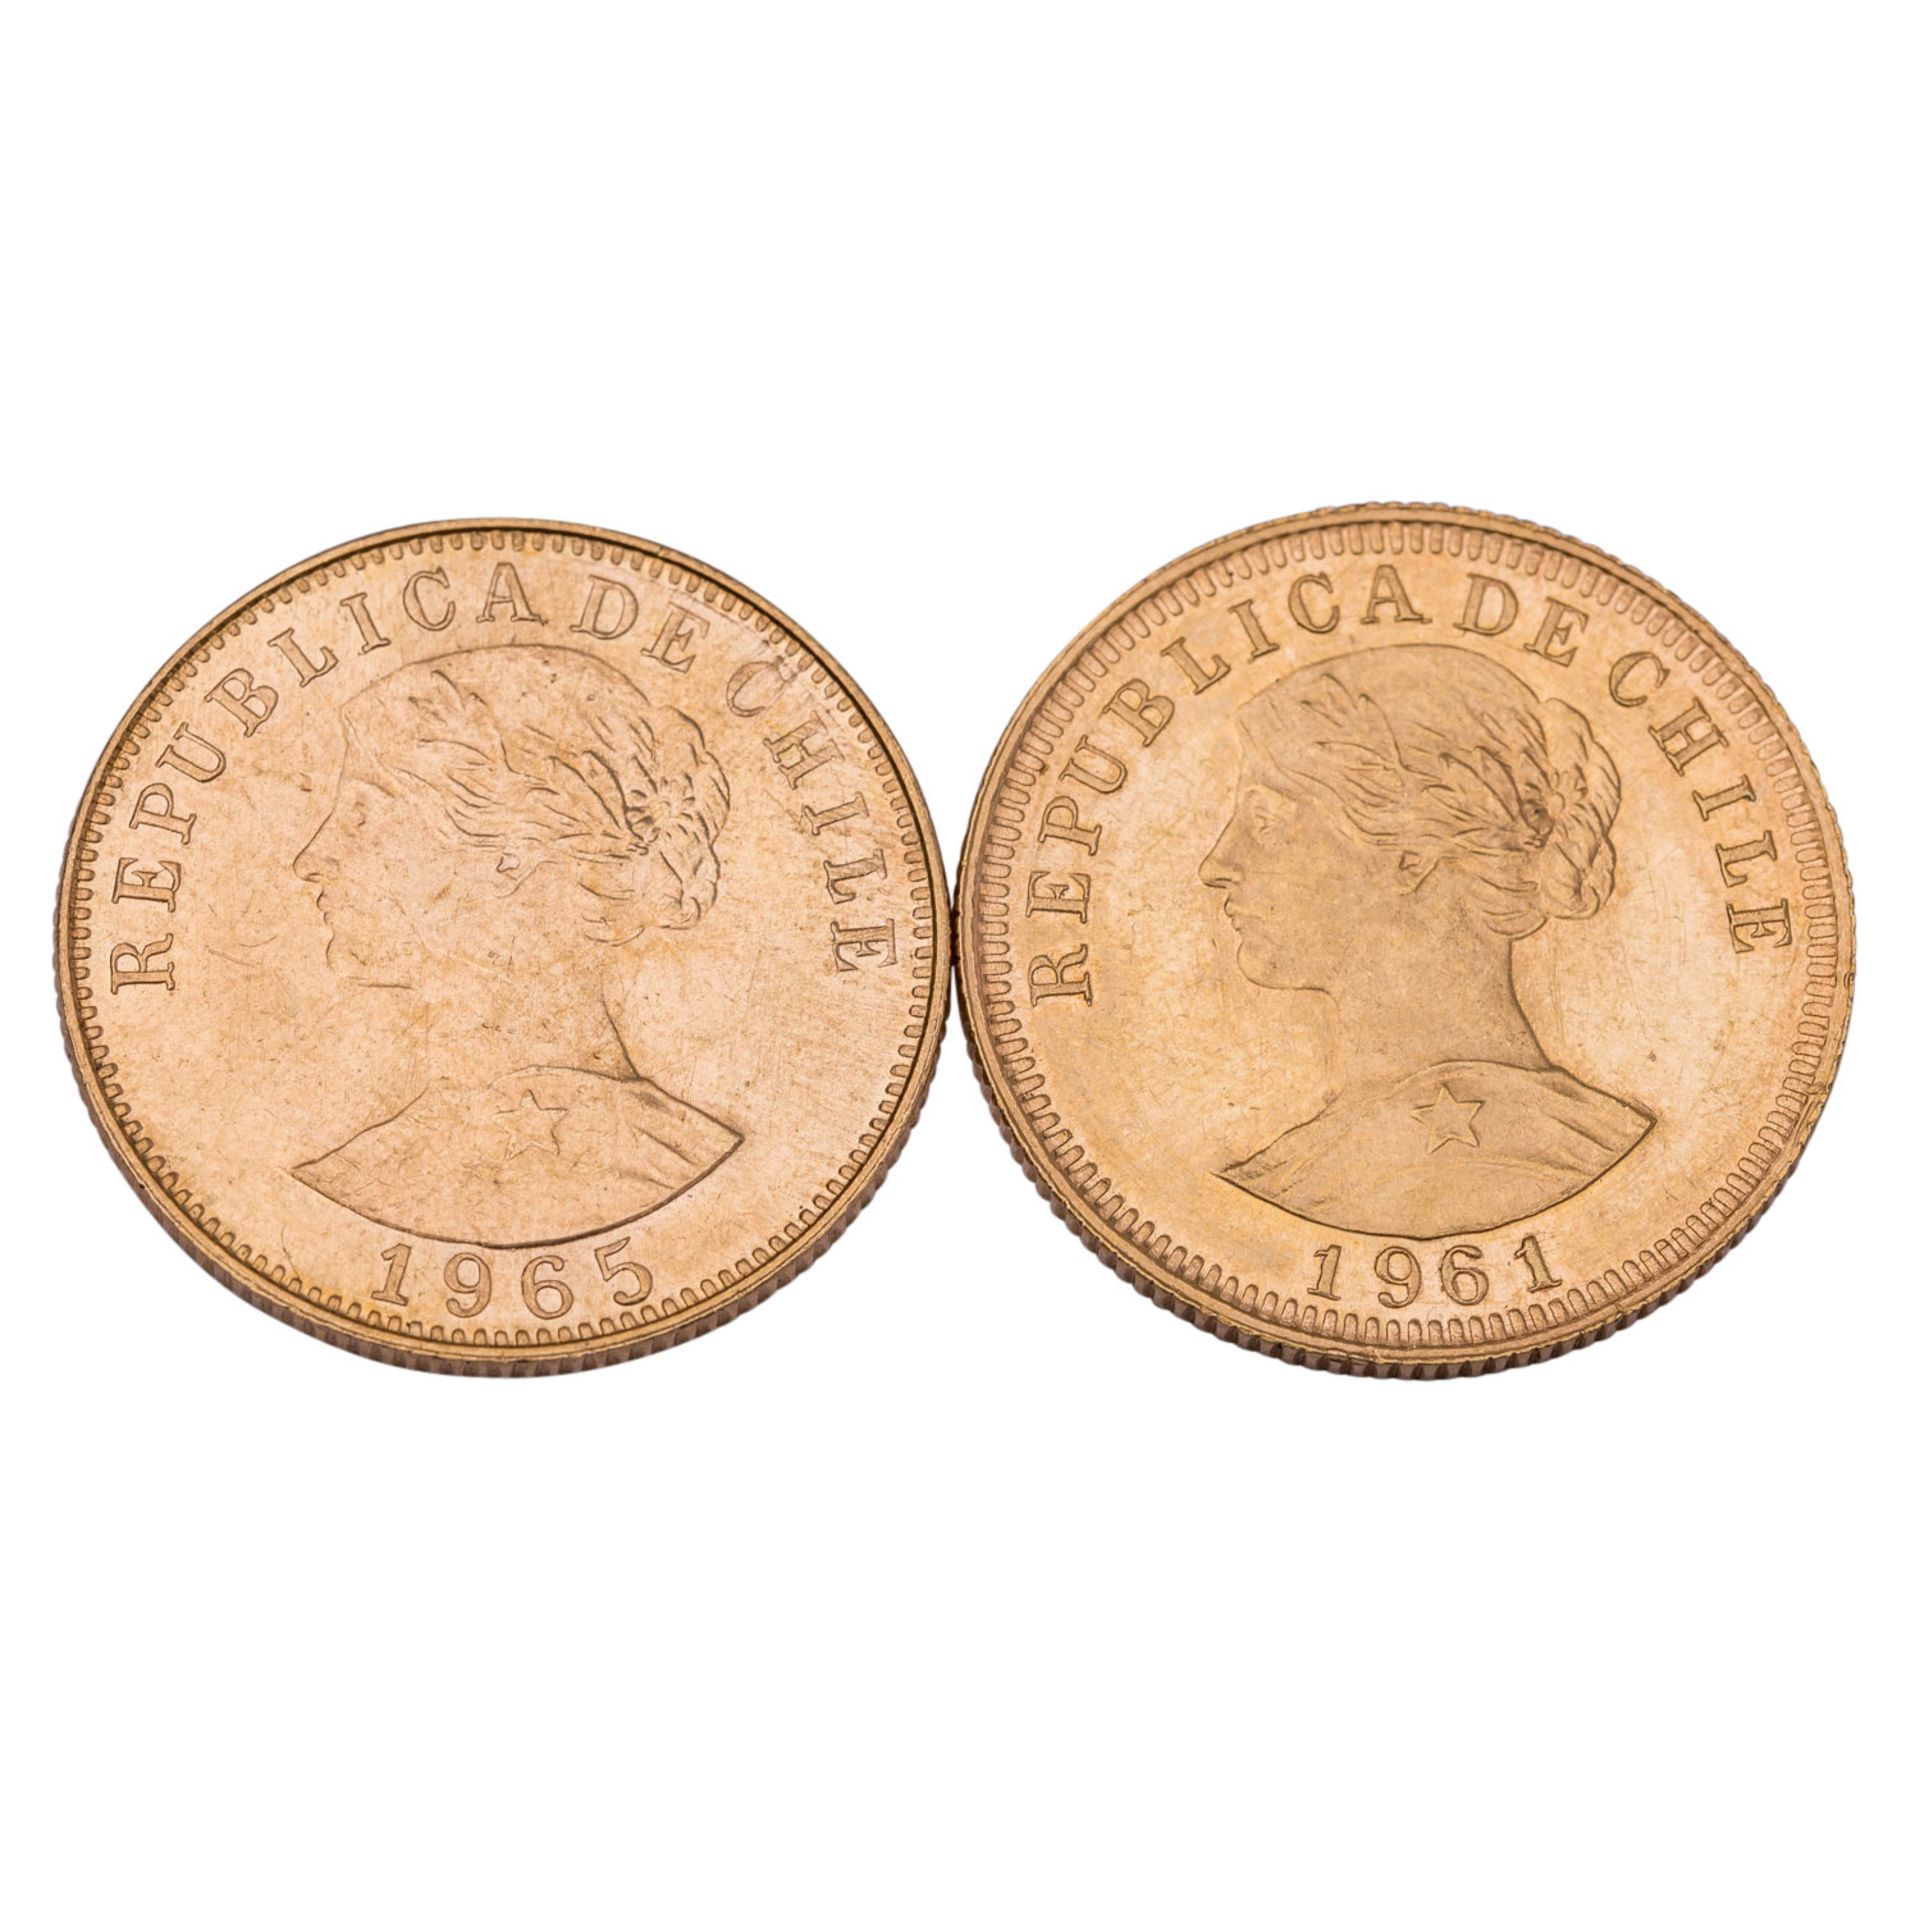 Chile - 2 x 50 Pesos 1961, 1965, Liberty, GOLD, - Image 2 of 2